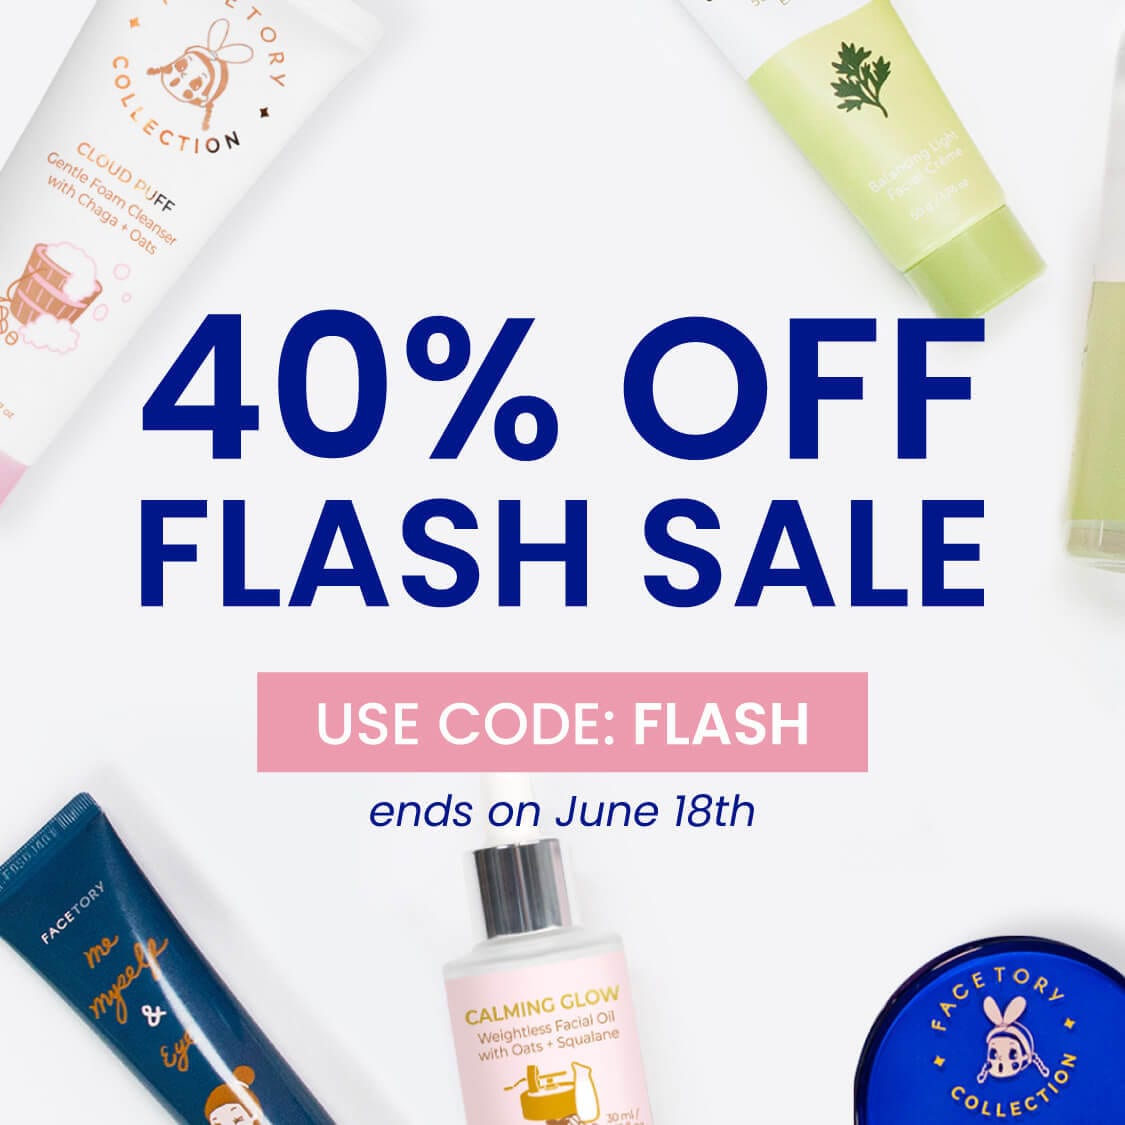 FaceTory *Flash Sale*: 40% OFF